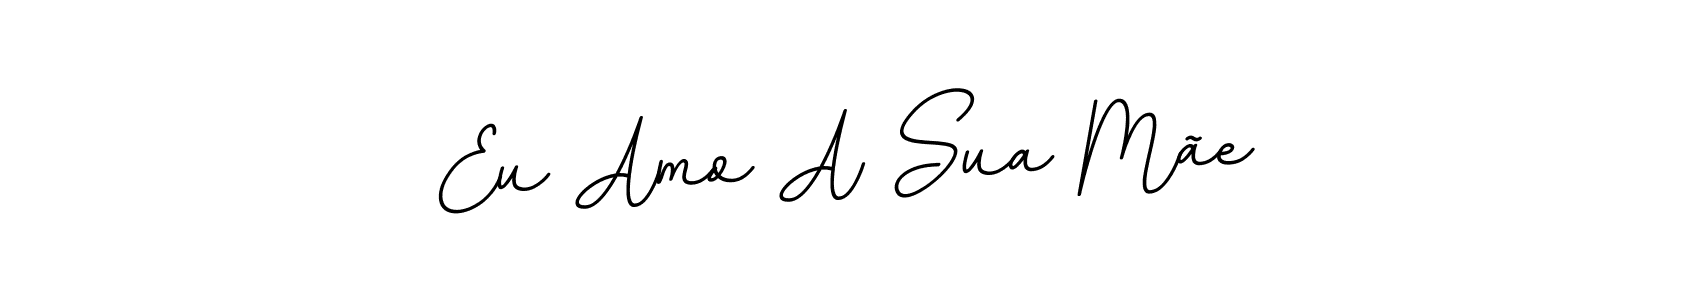 How to Draw Eu Amo A Sua Mãe signature style? BallpointsItalic-DORy9 is a latest design signature styles for name Eu Amo A Sua Mãe. Eu Amo A Sua Mãe signature style 11 images and pictures png